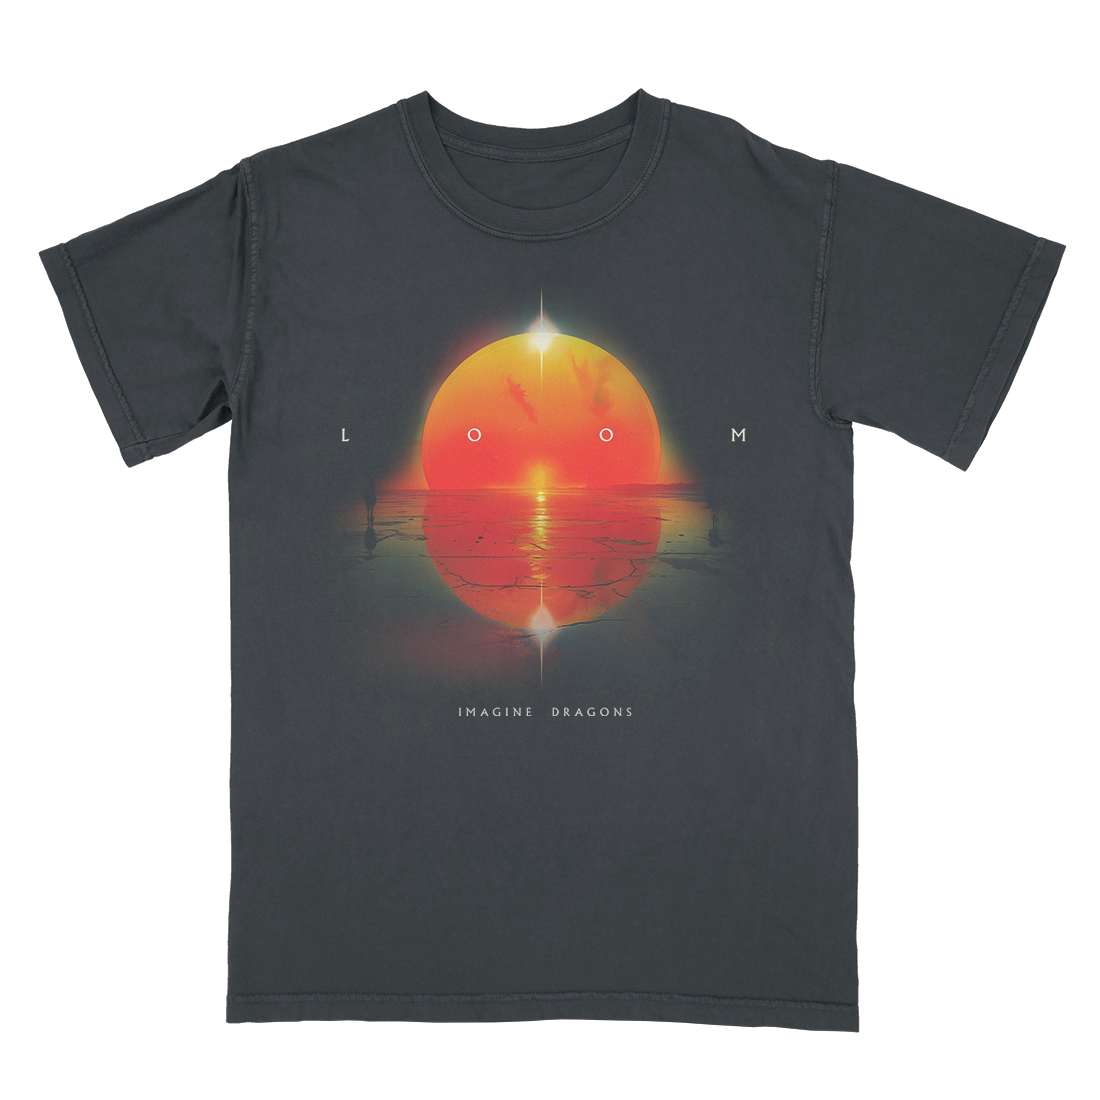 Imagine Dragons - Loom Album Cover T-Shirt